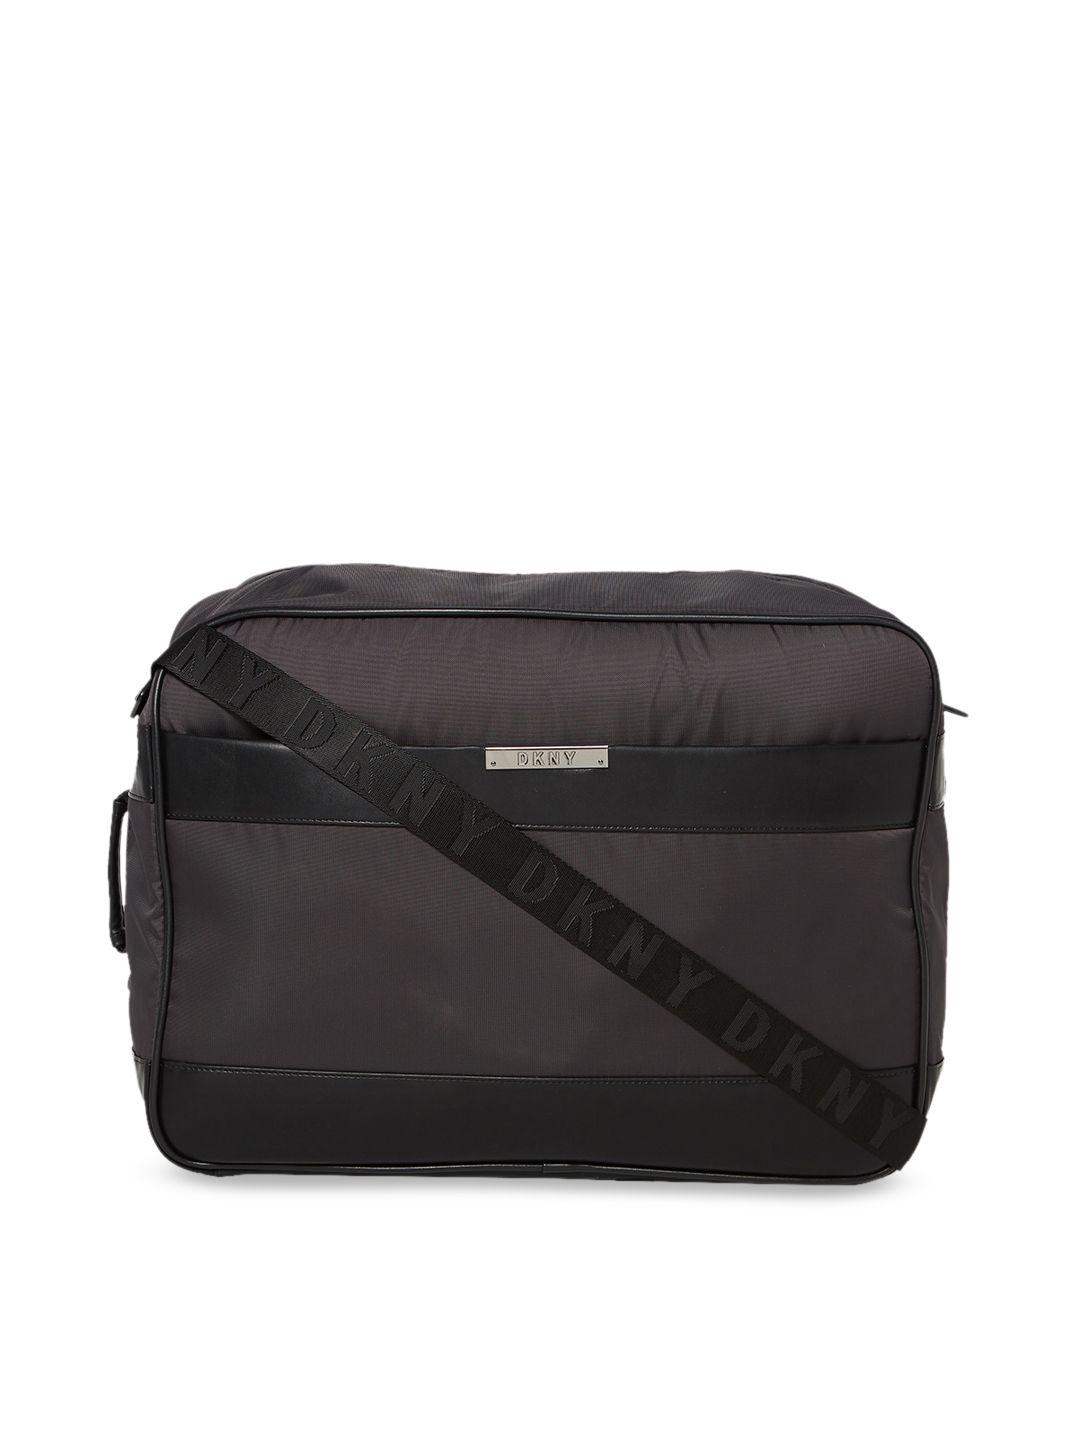 dkny-mens-ace-soft-medium-size-backpack